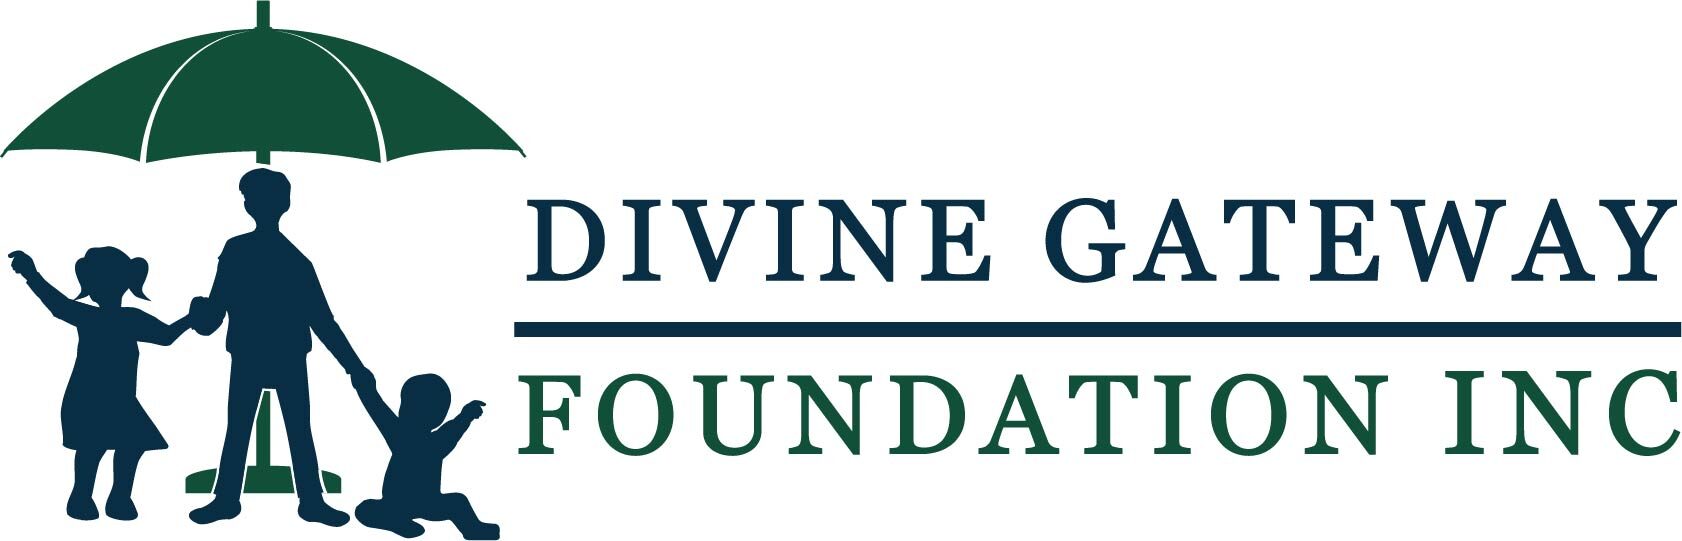 Divine Gateway Foundation Inc. Orphanage